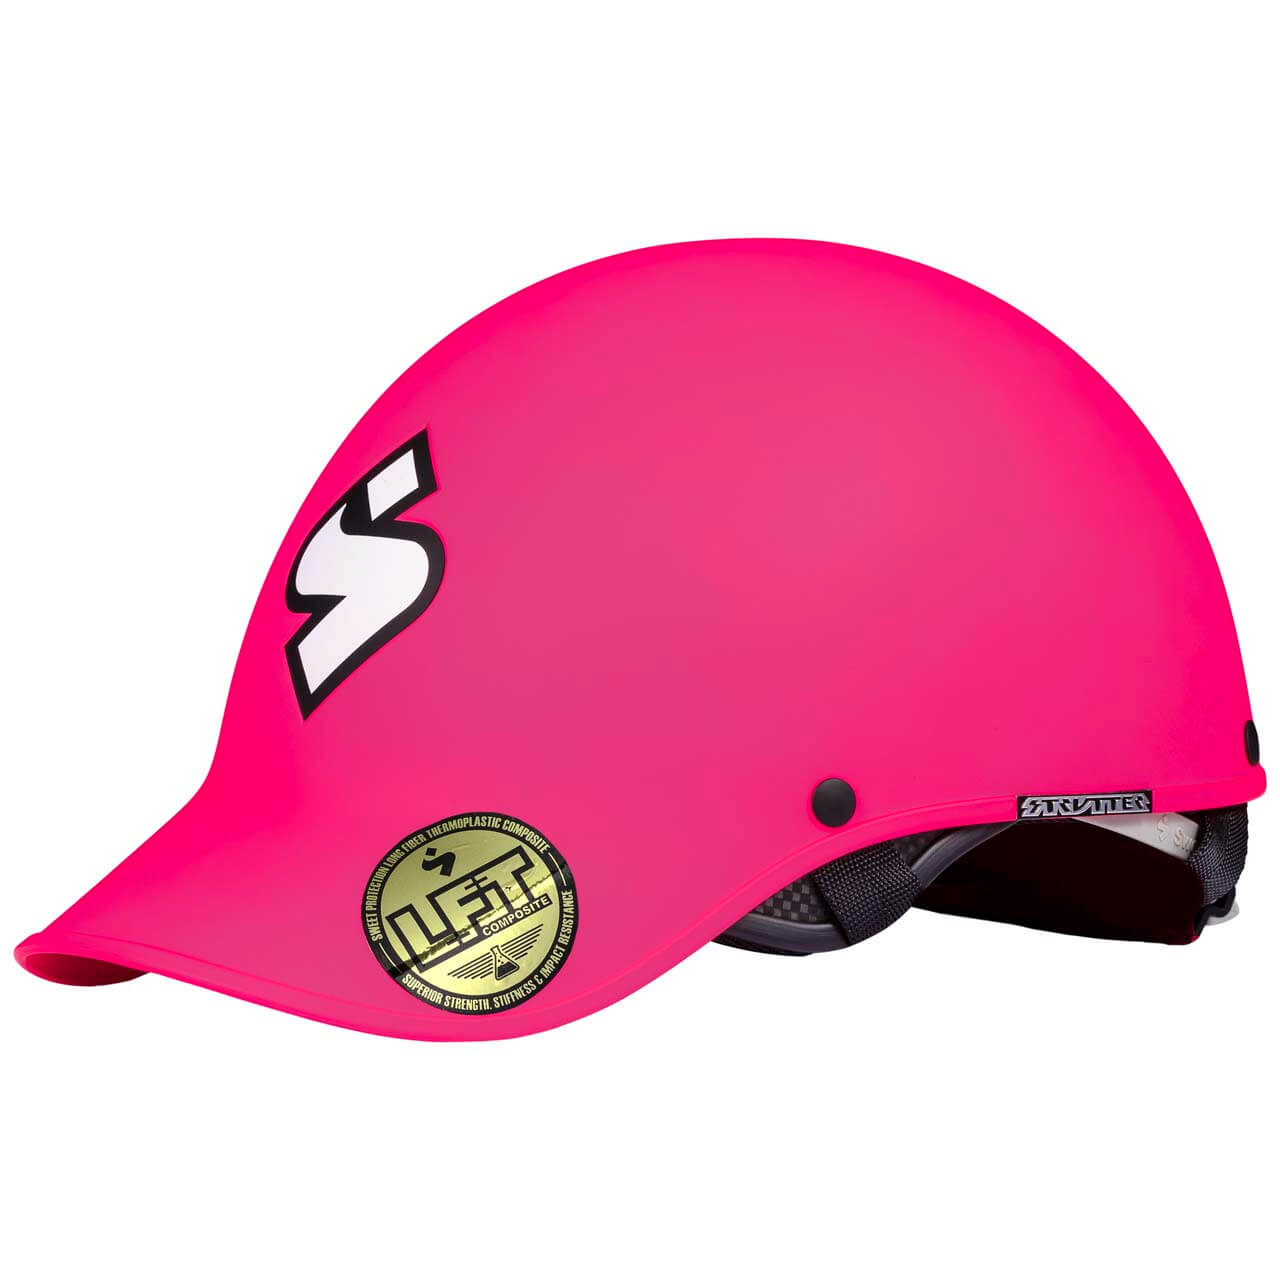 Sweet Strutter Freestyle Kajakhelm - Neon Pink, L/XL von Sweet Protection}